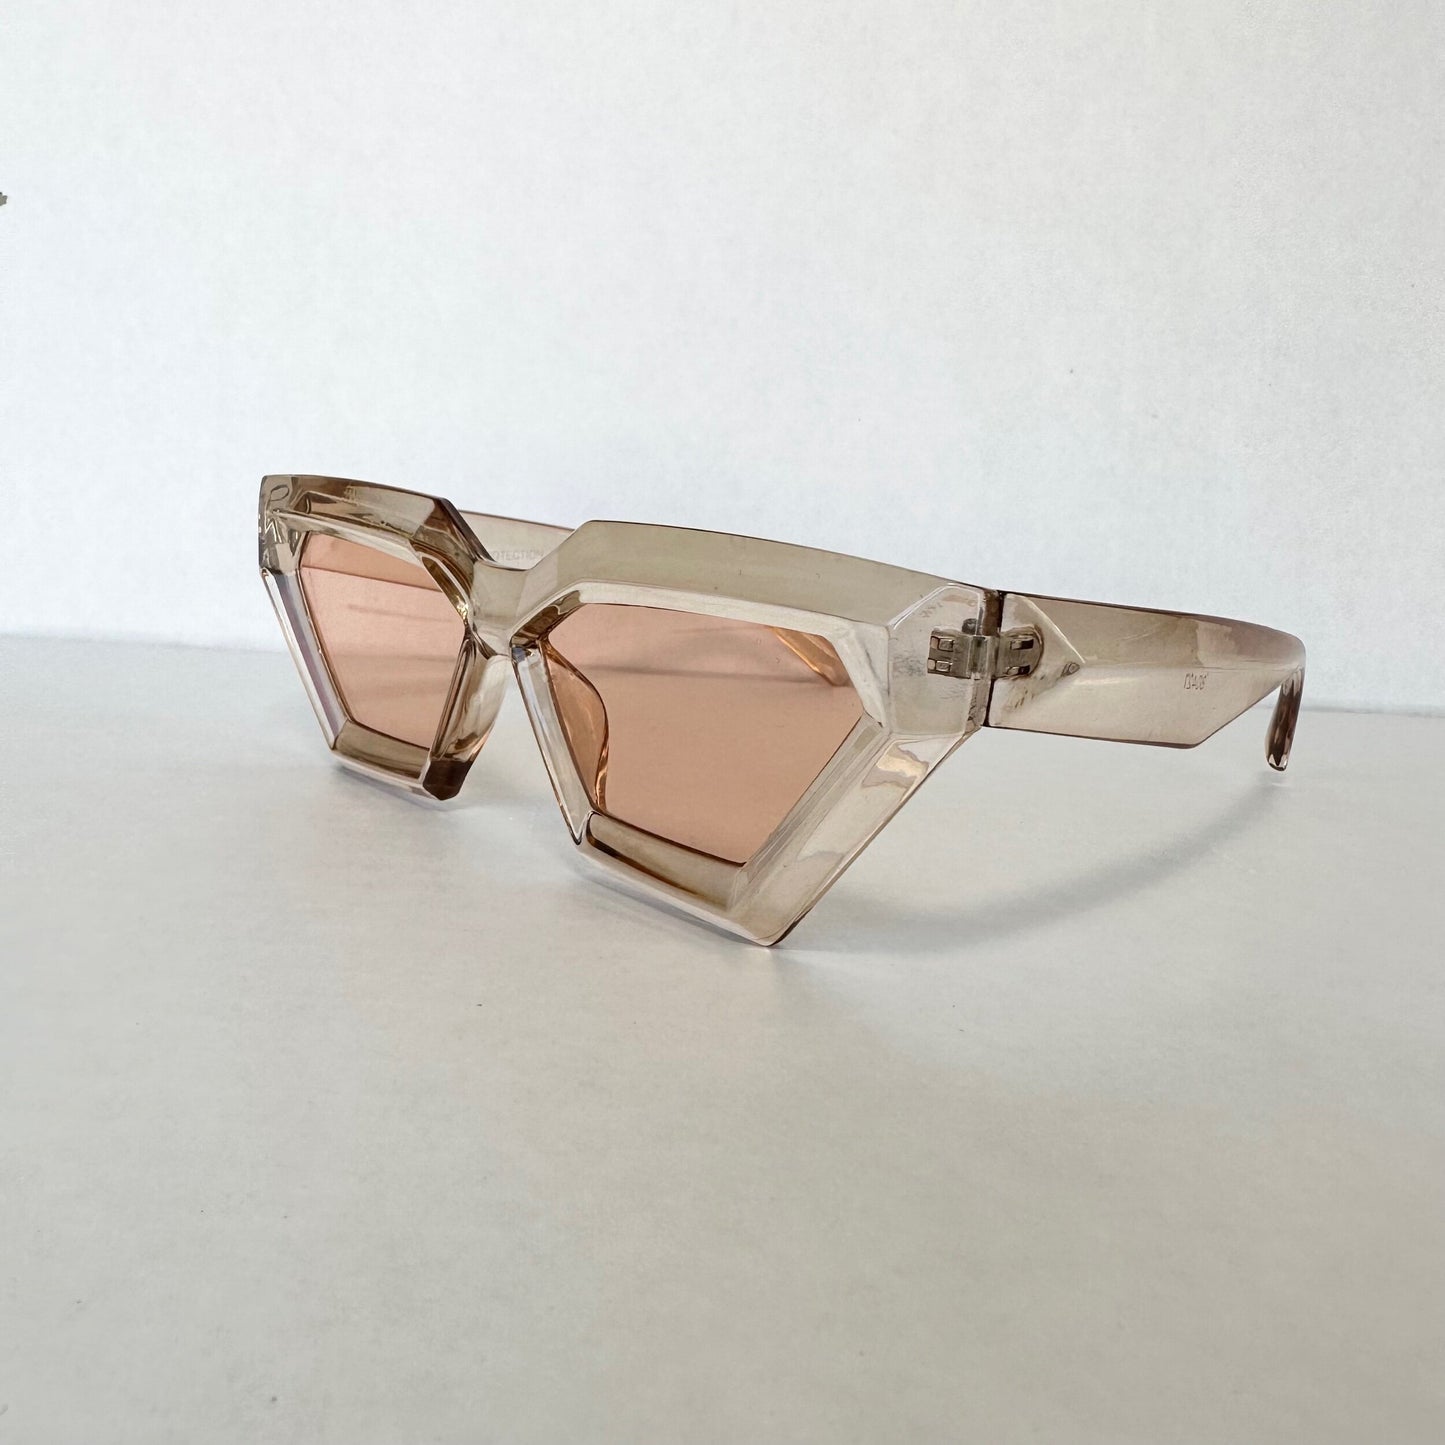 Gobi Geometric Sunglasses